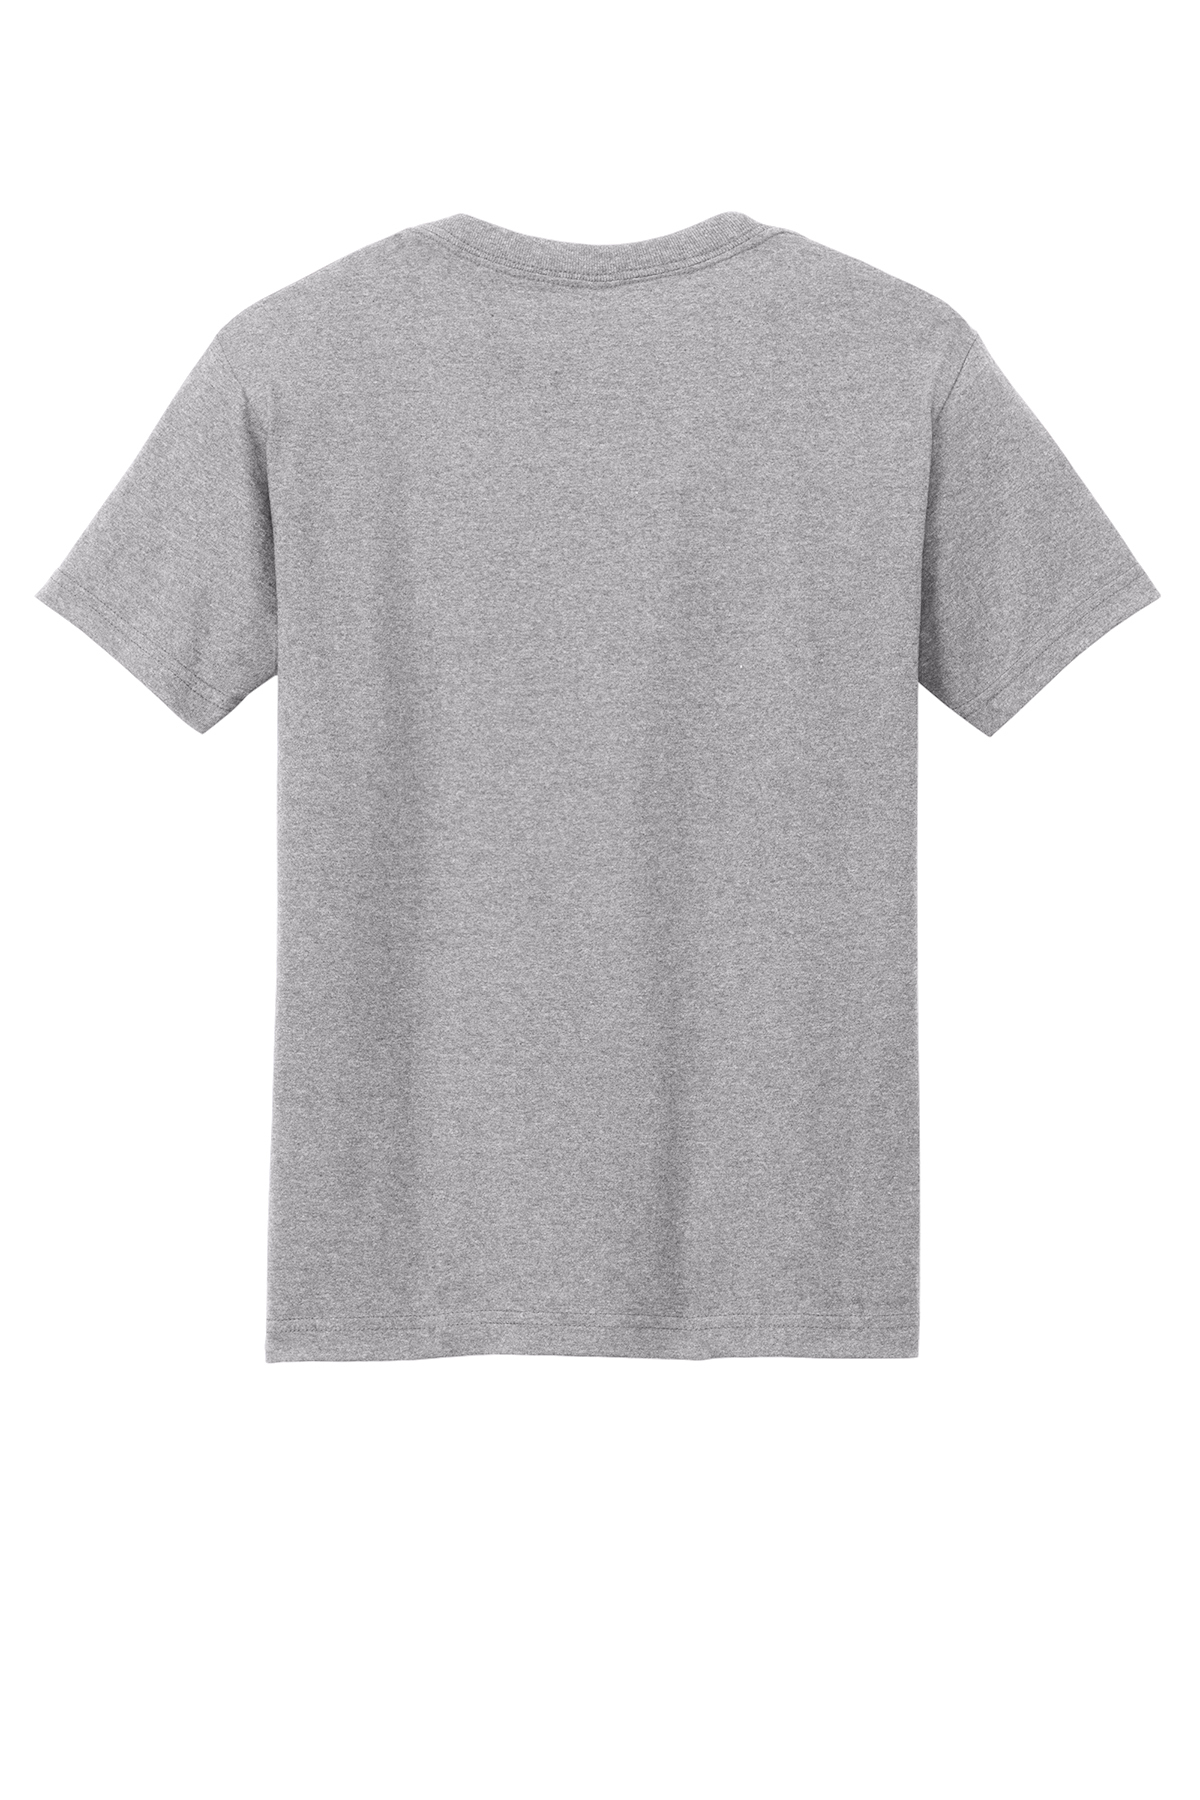 American Apparel Heavyweight Unisex T-Shirt | Product | SanMar